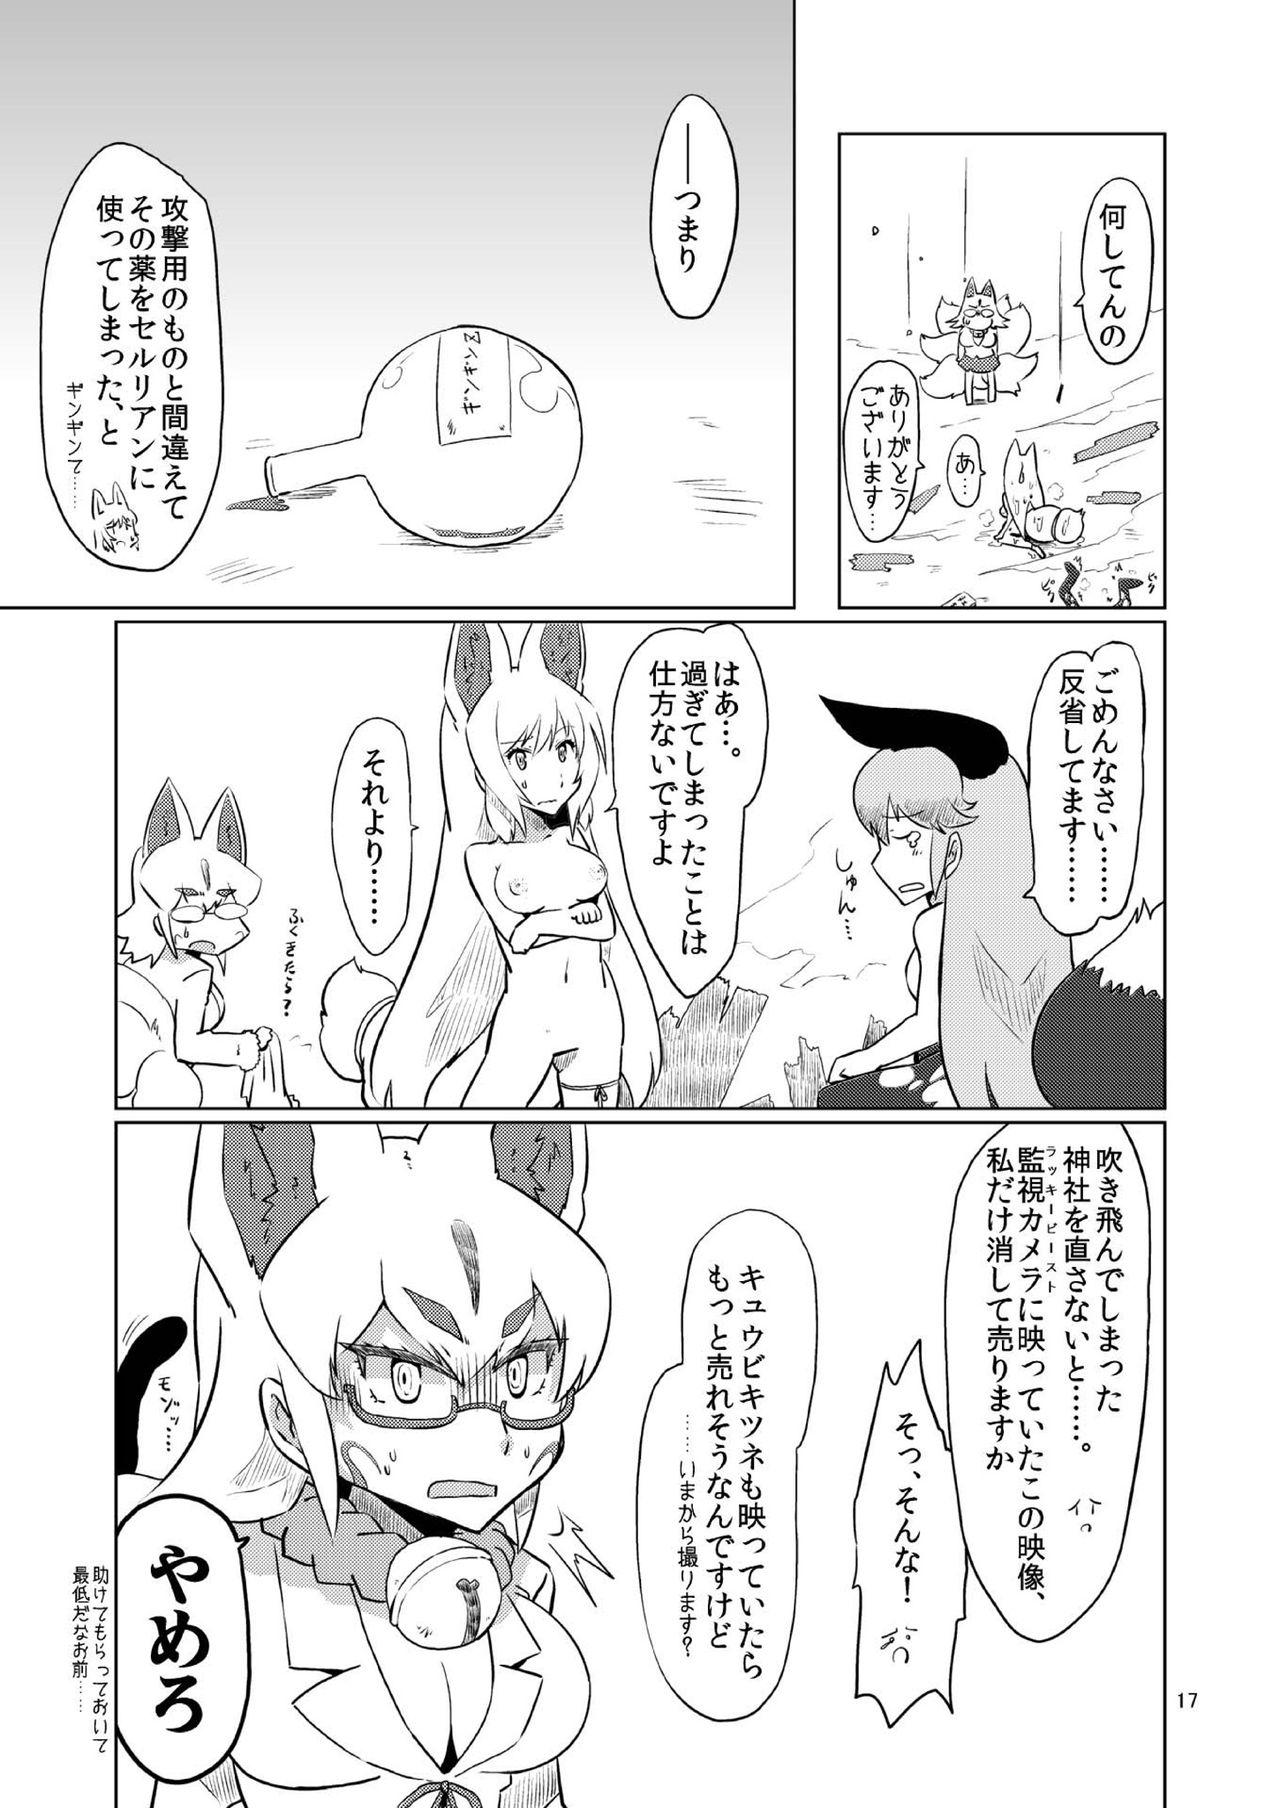 Cream Oinarisama vs Shokushu - Kemono friends Style - Page 17